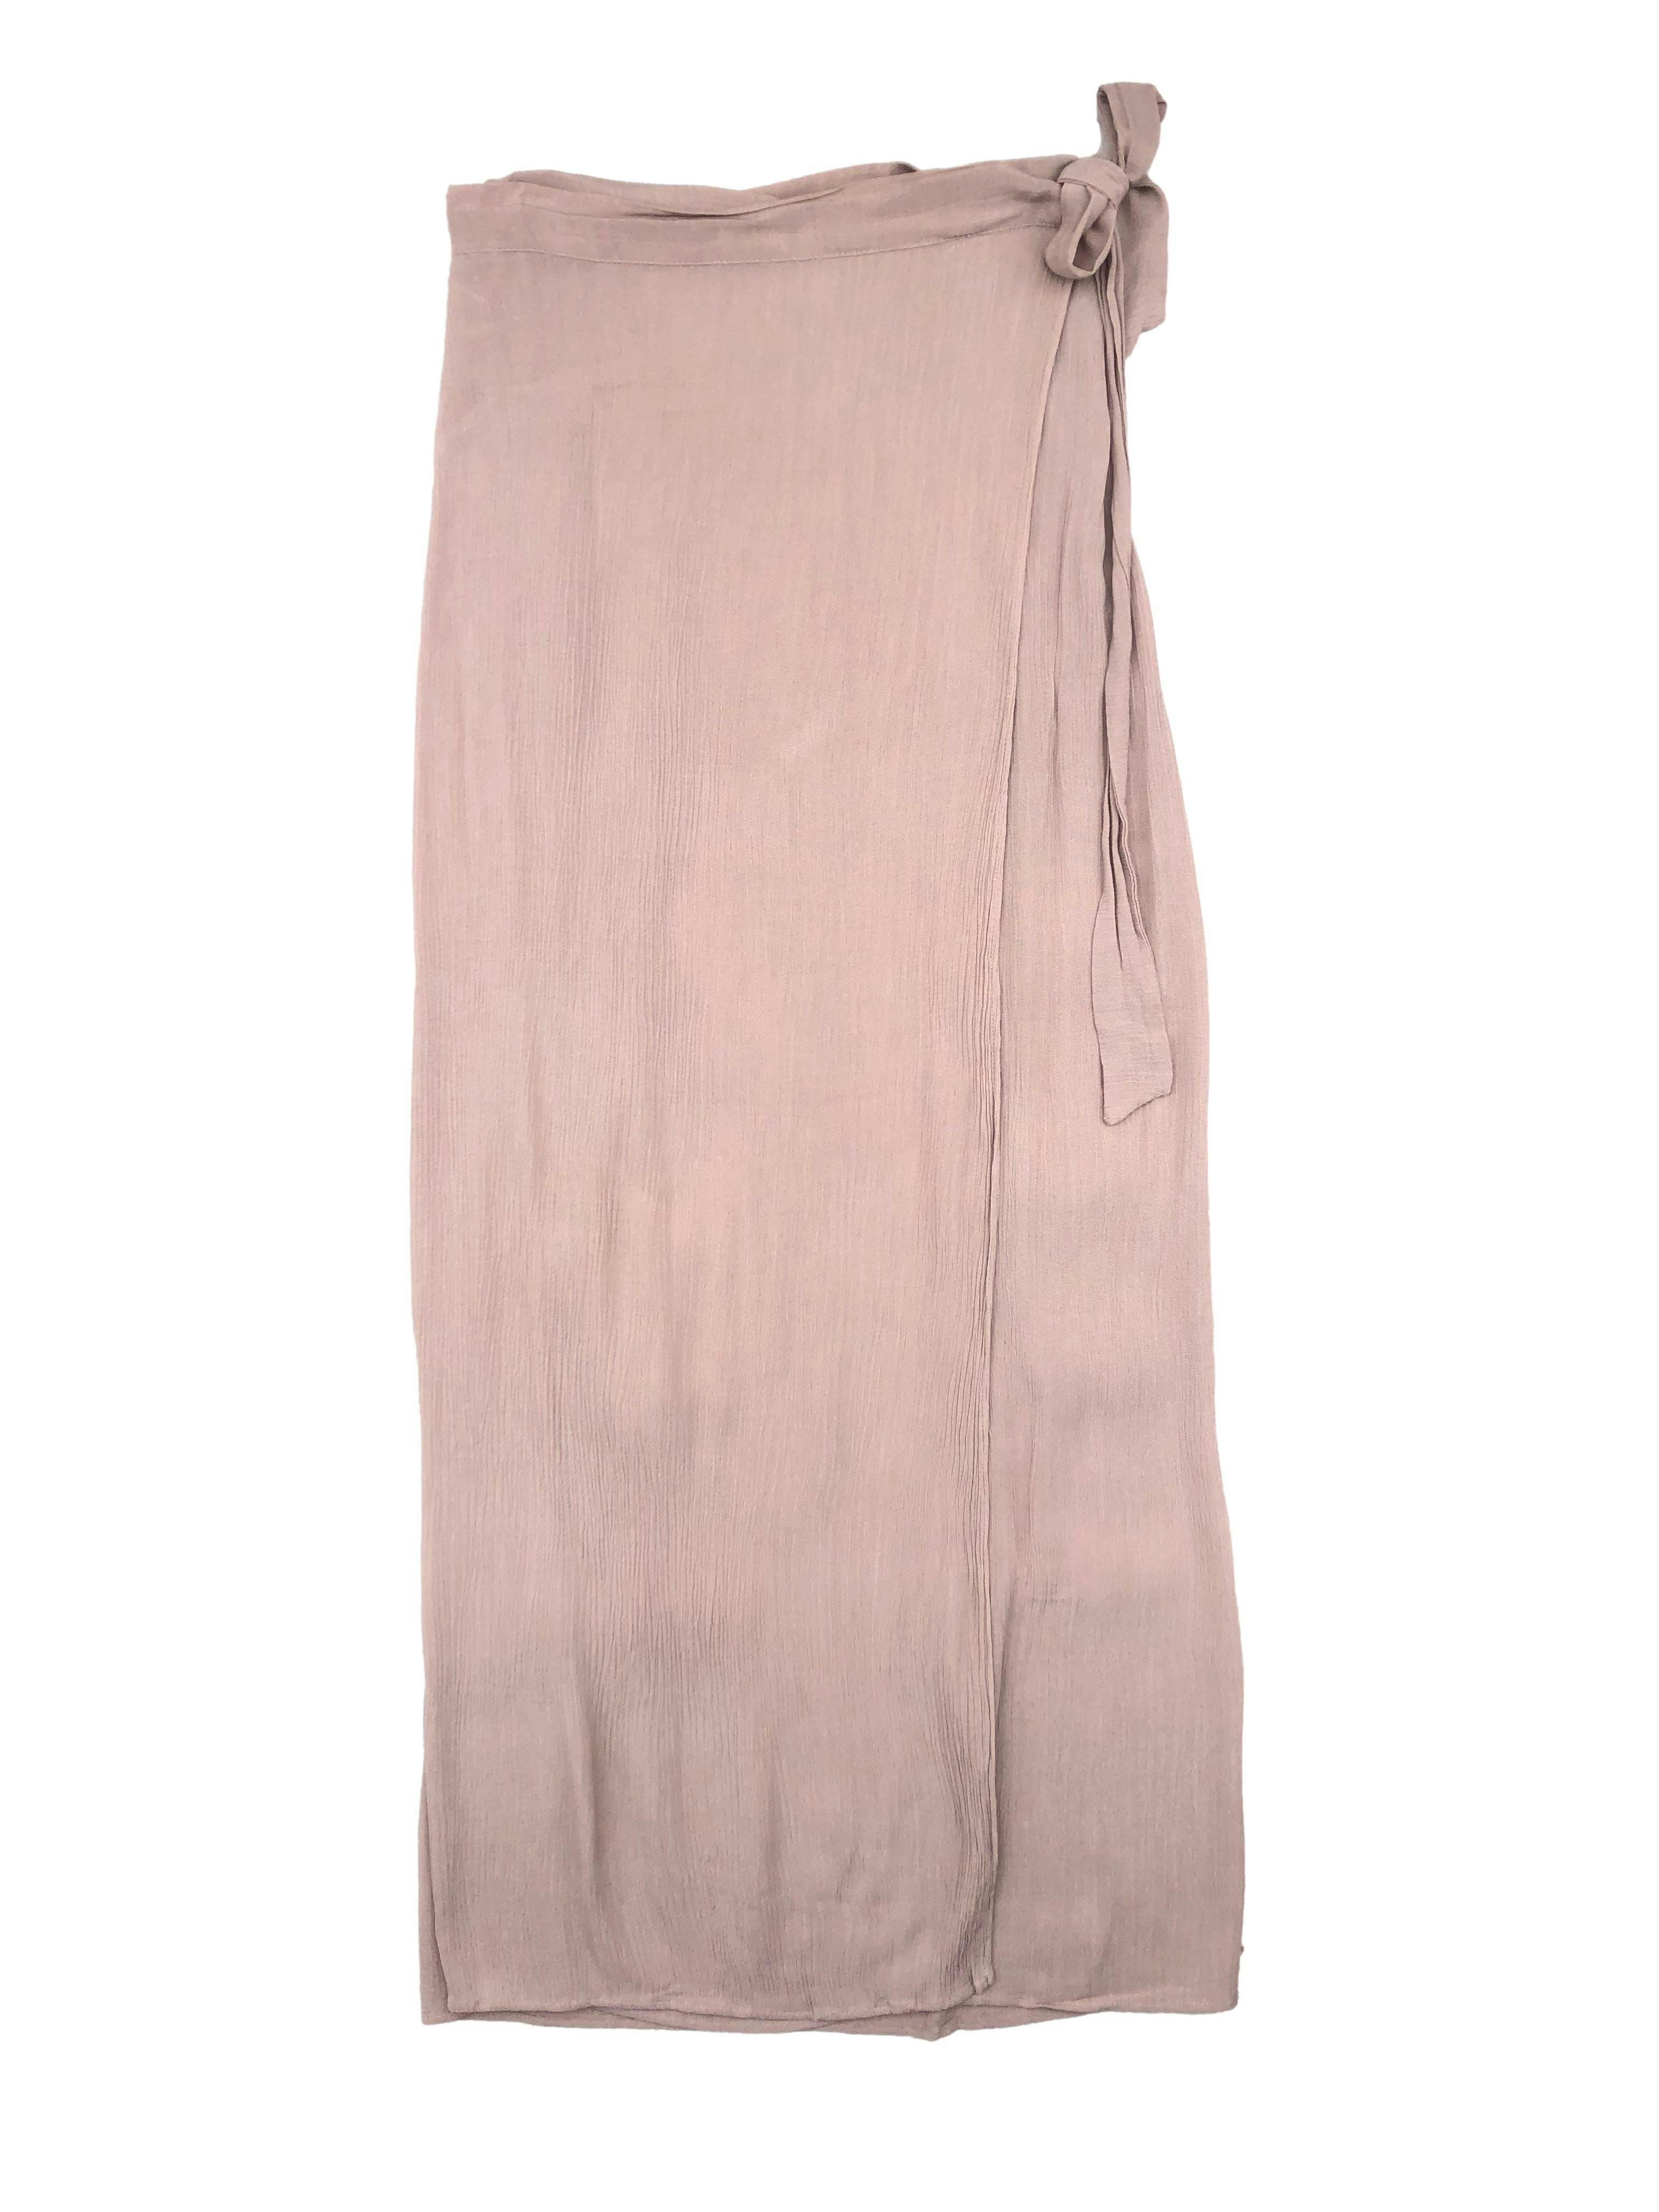 Falda envolvente tela chalis con textura color arena, pretina elástica atrás. Largo 95cm